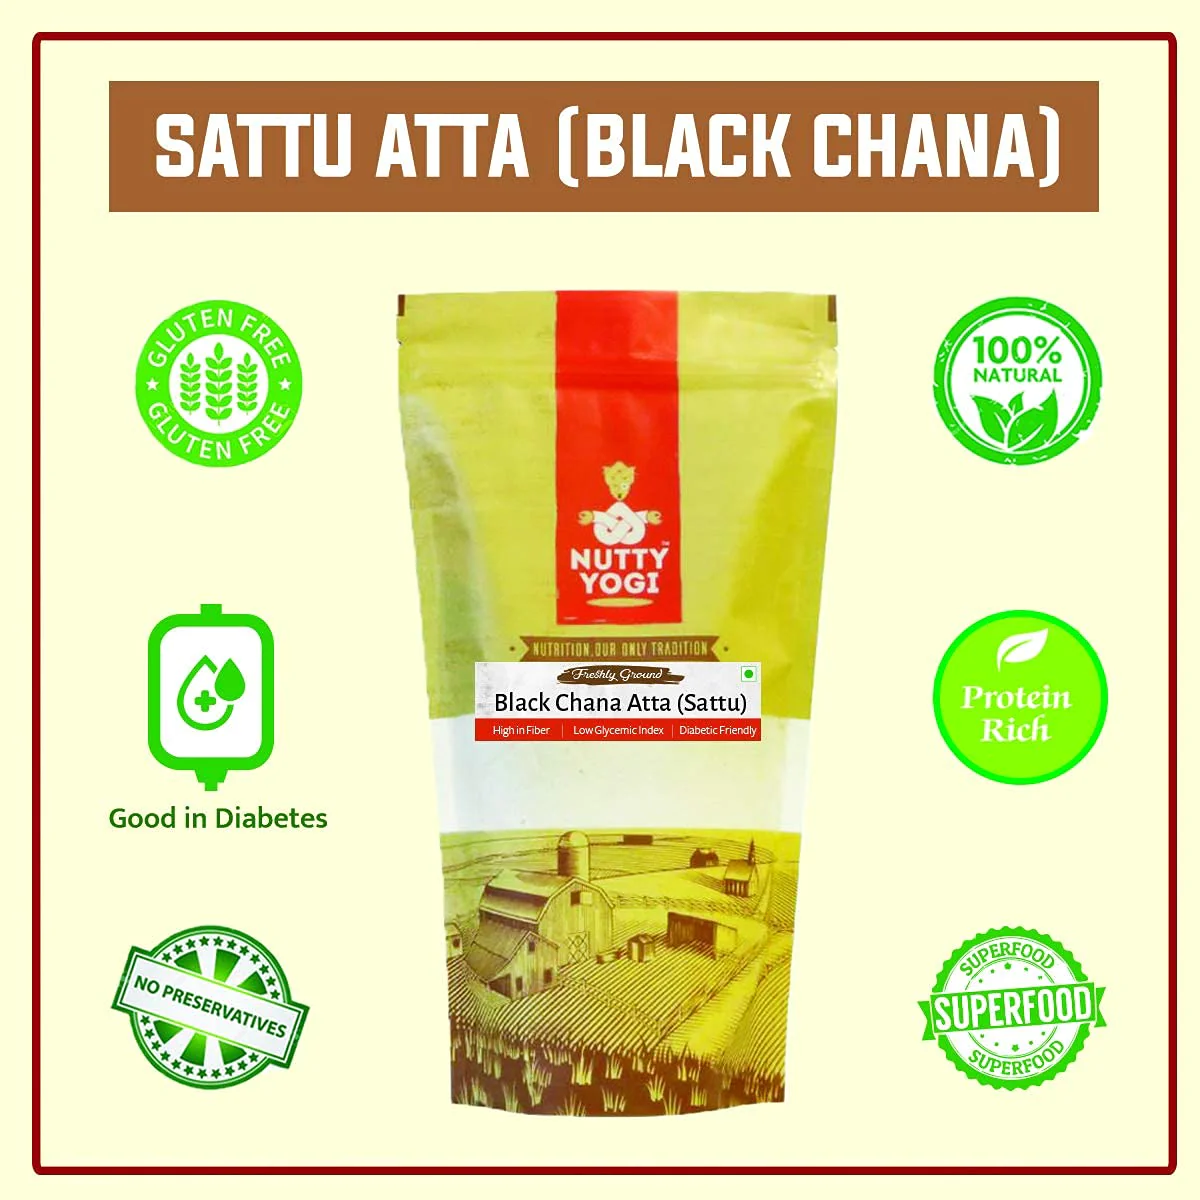 Product: Nutty Yogi Black Chana (Sattu) Atta